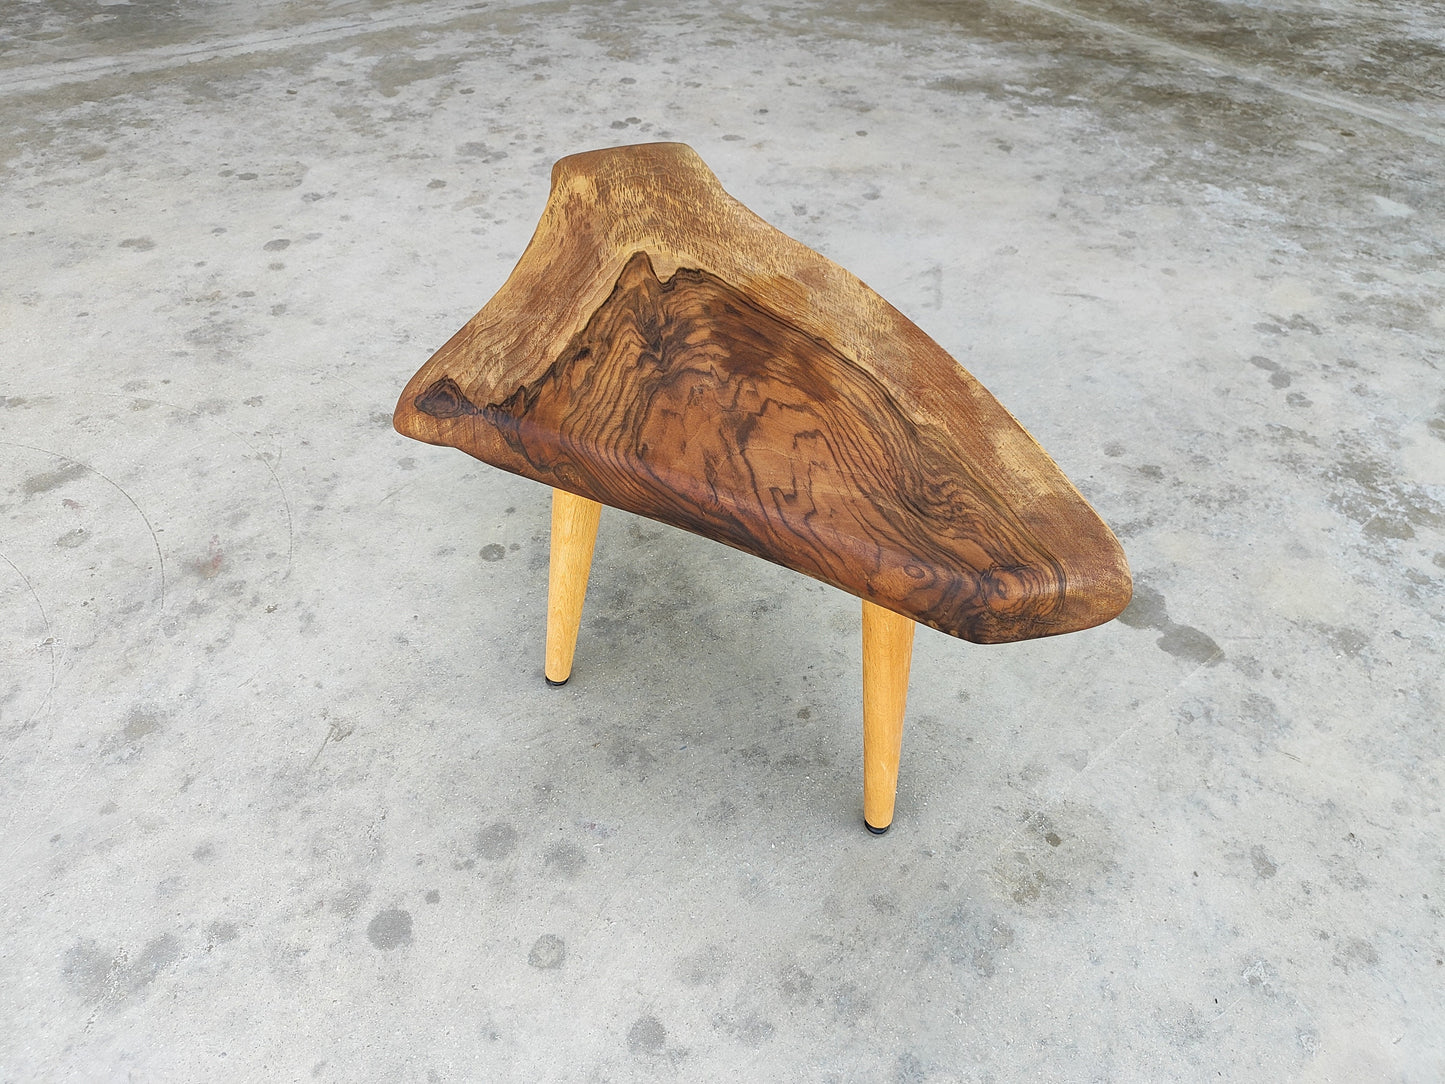 Rustic Handmade Wood Coffee Table - Unique Walnut (WG-1074)